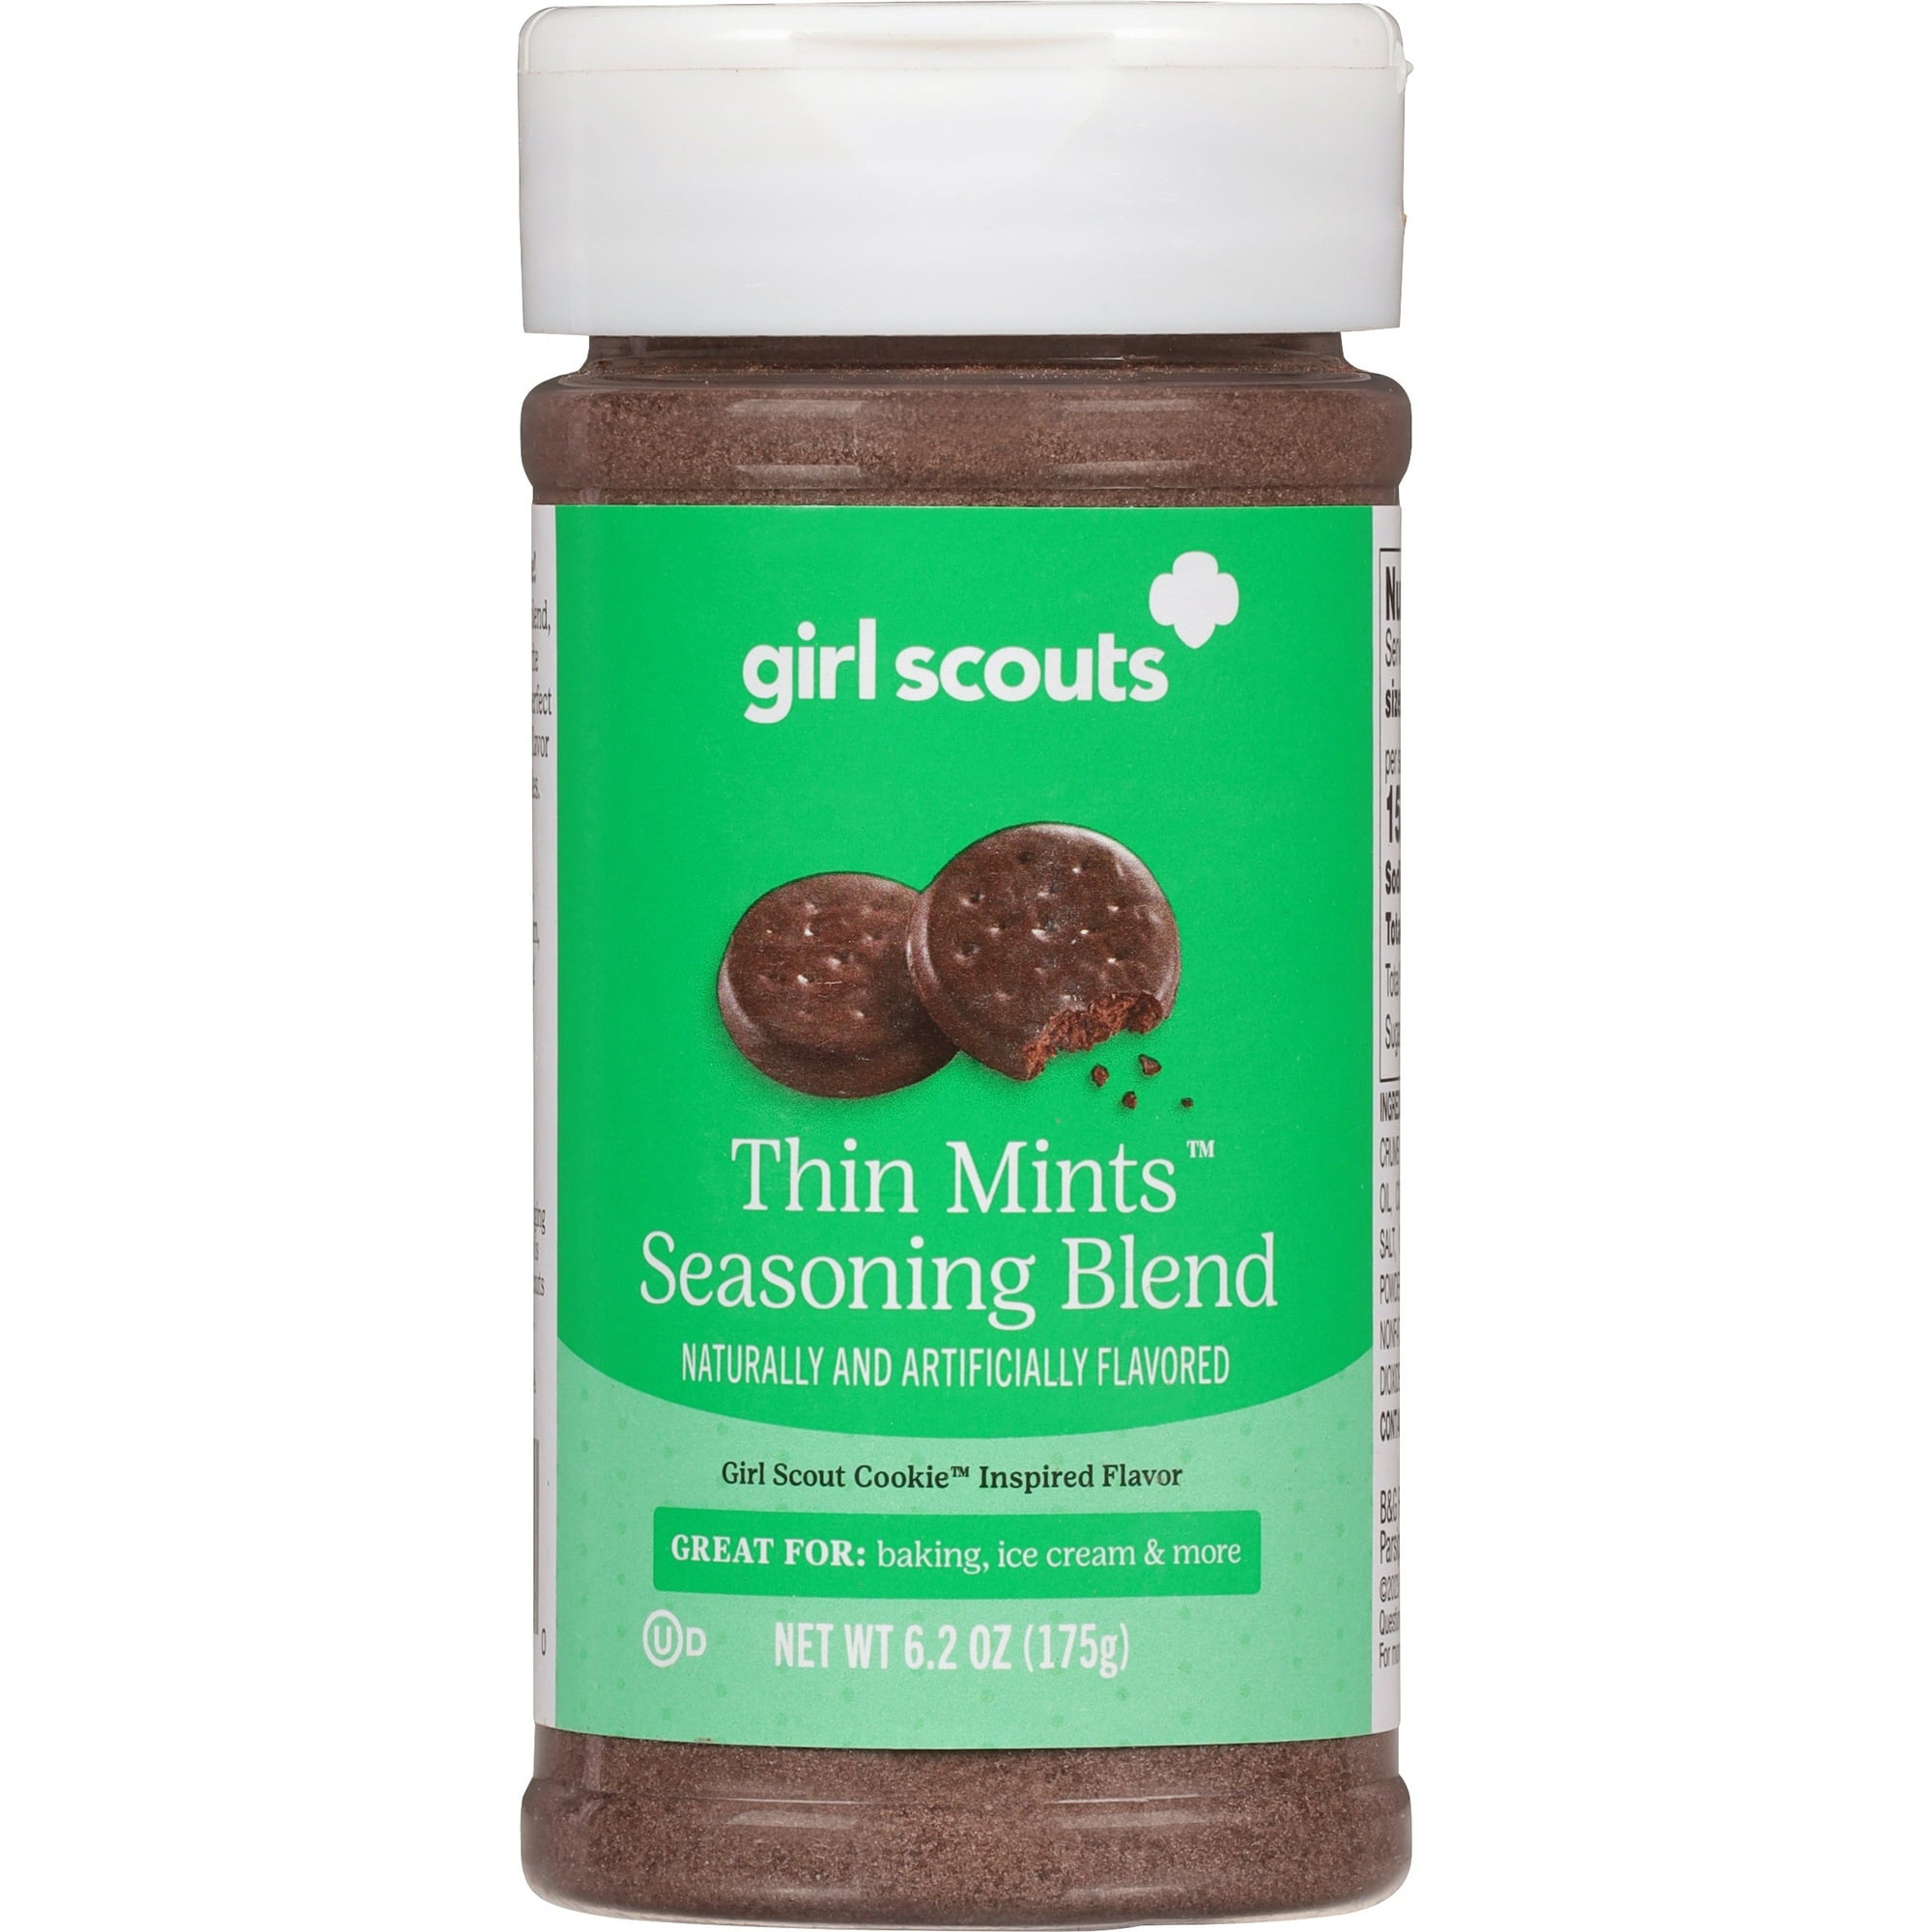 Girl Scouts Thin Mints Seasoning Blend, 6.2 oz